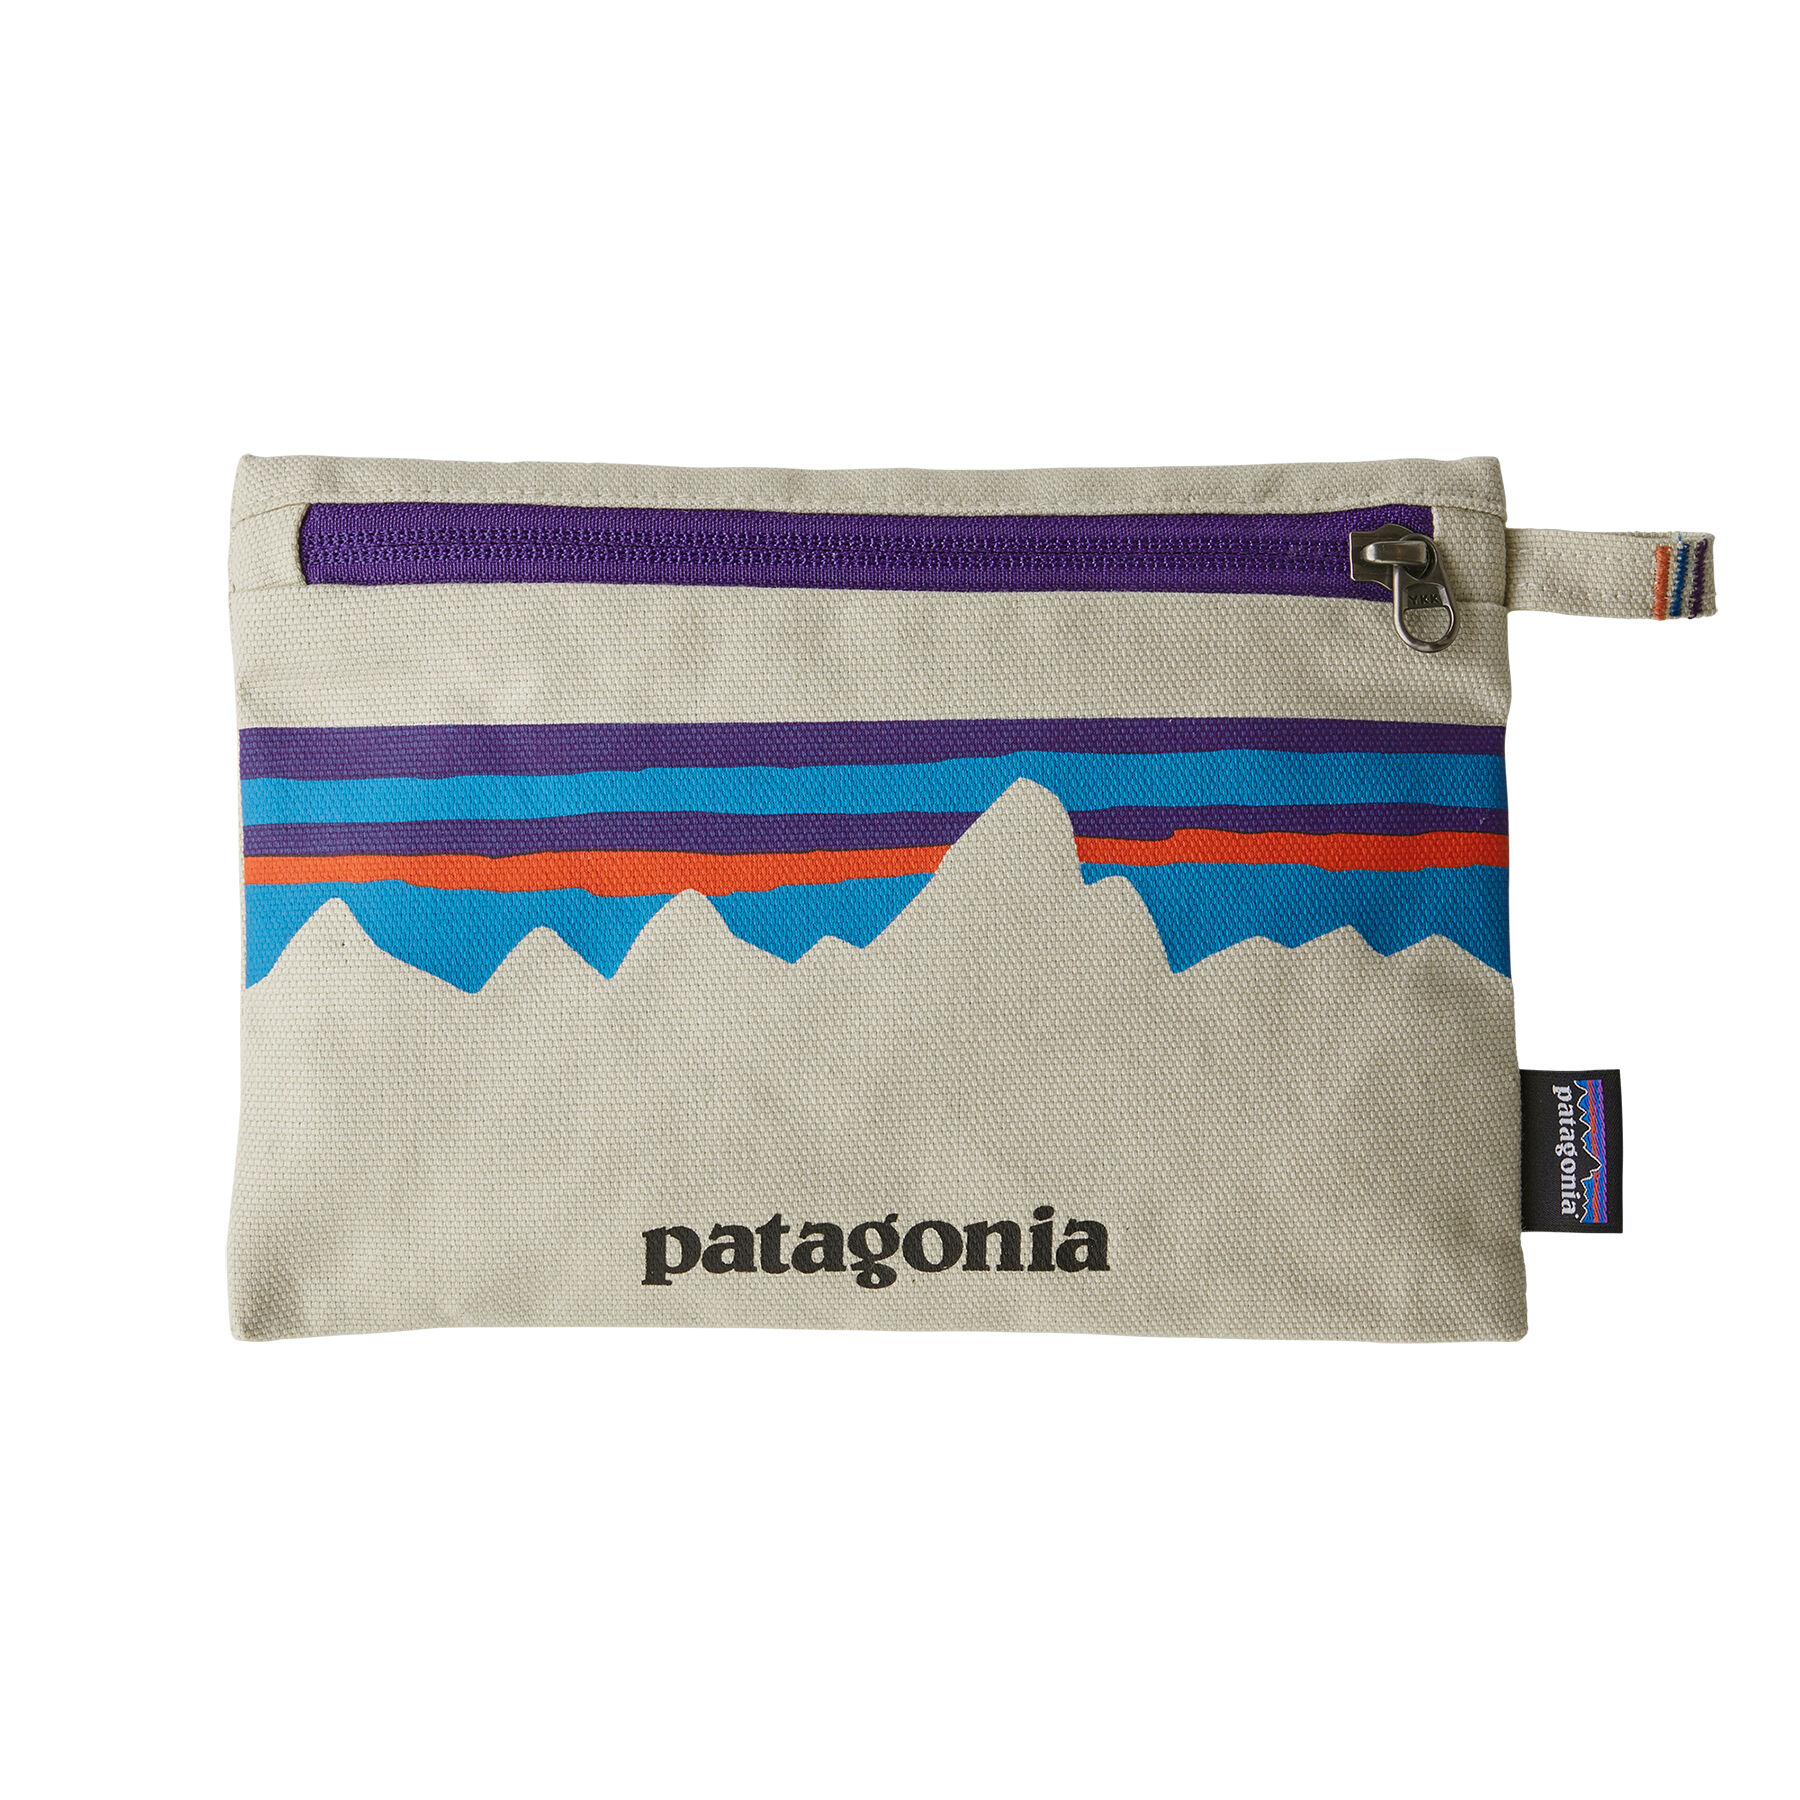 Patagonia Zippered Pouch - Travel handbag